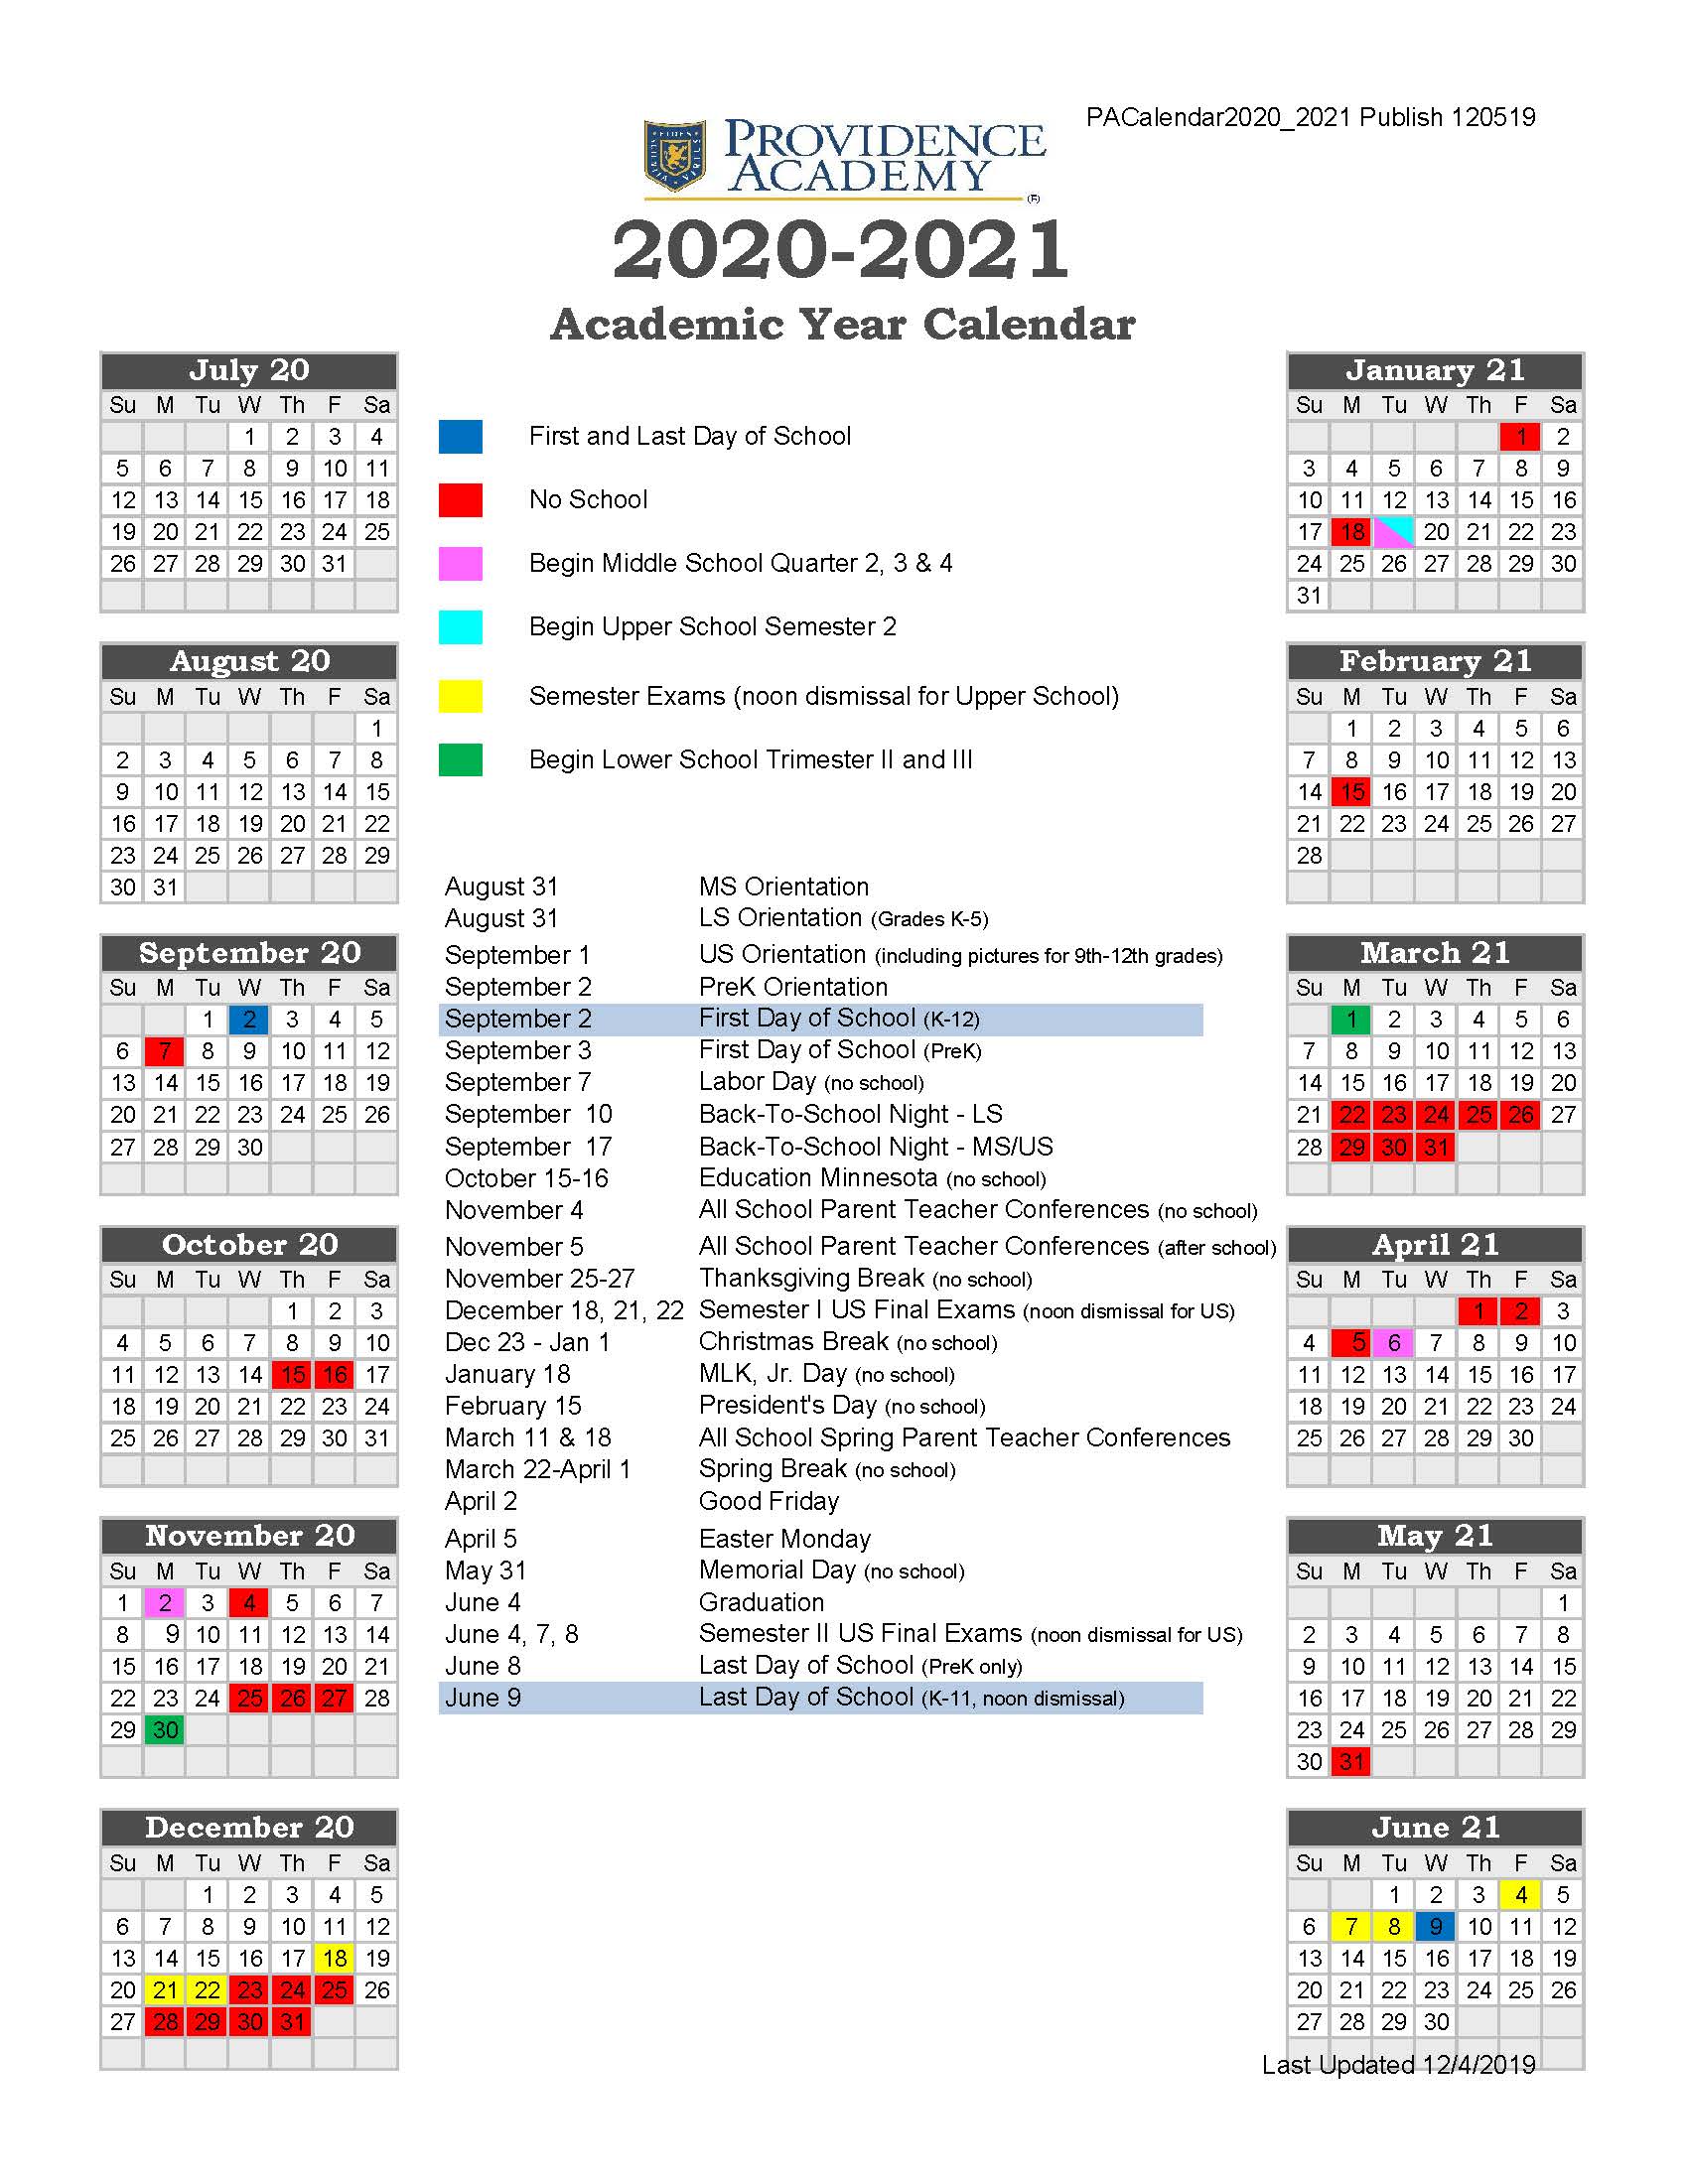 Scsu Academic Calendar Fall 2021 United States Map